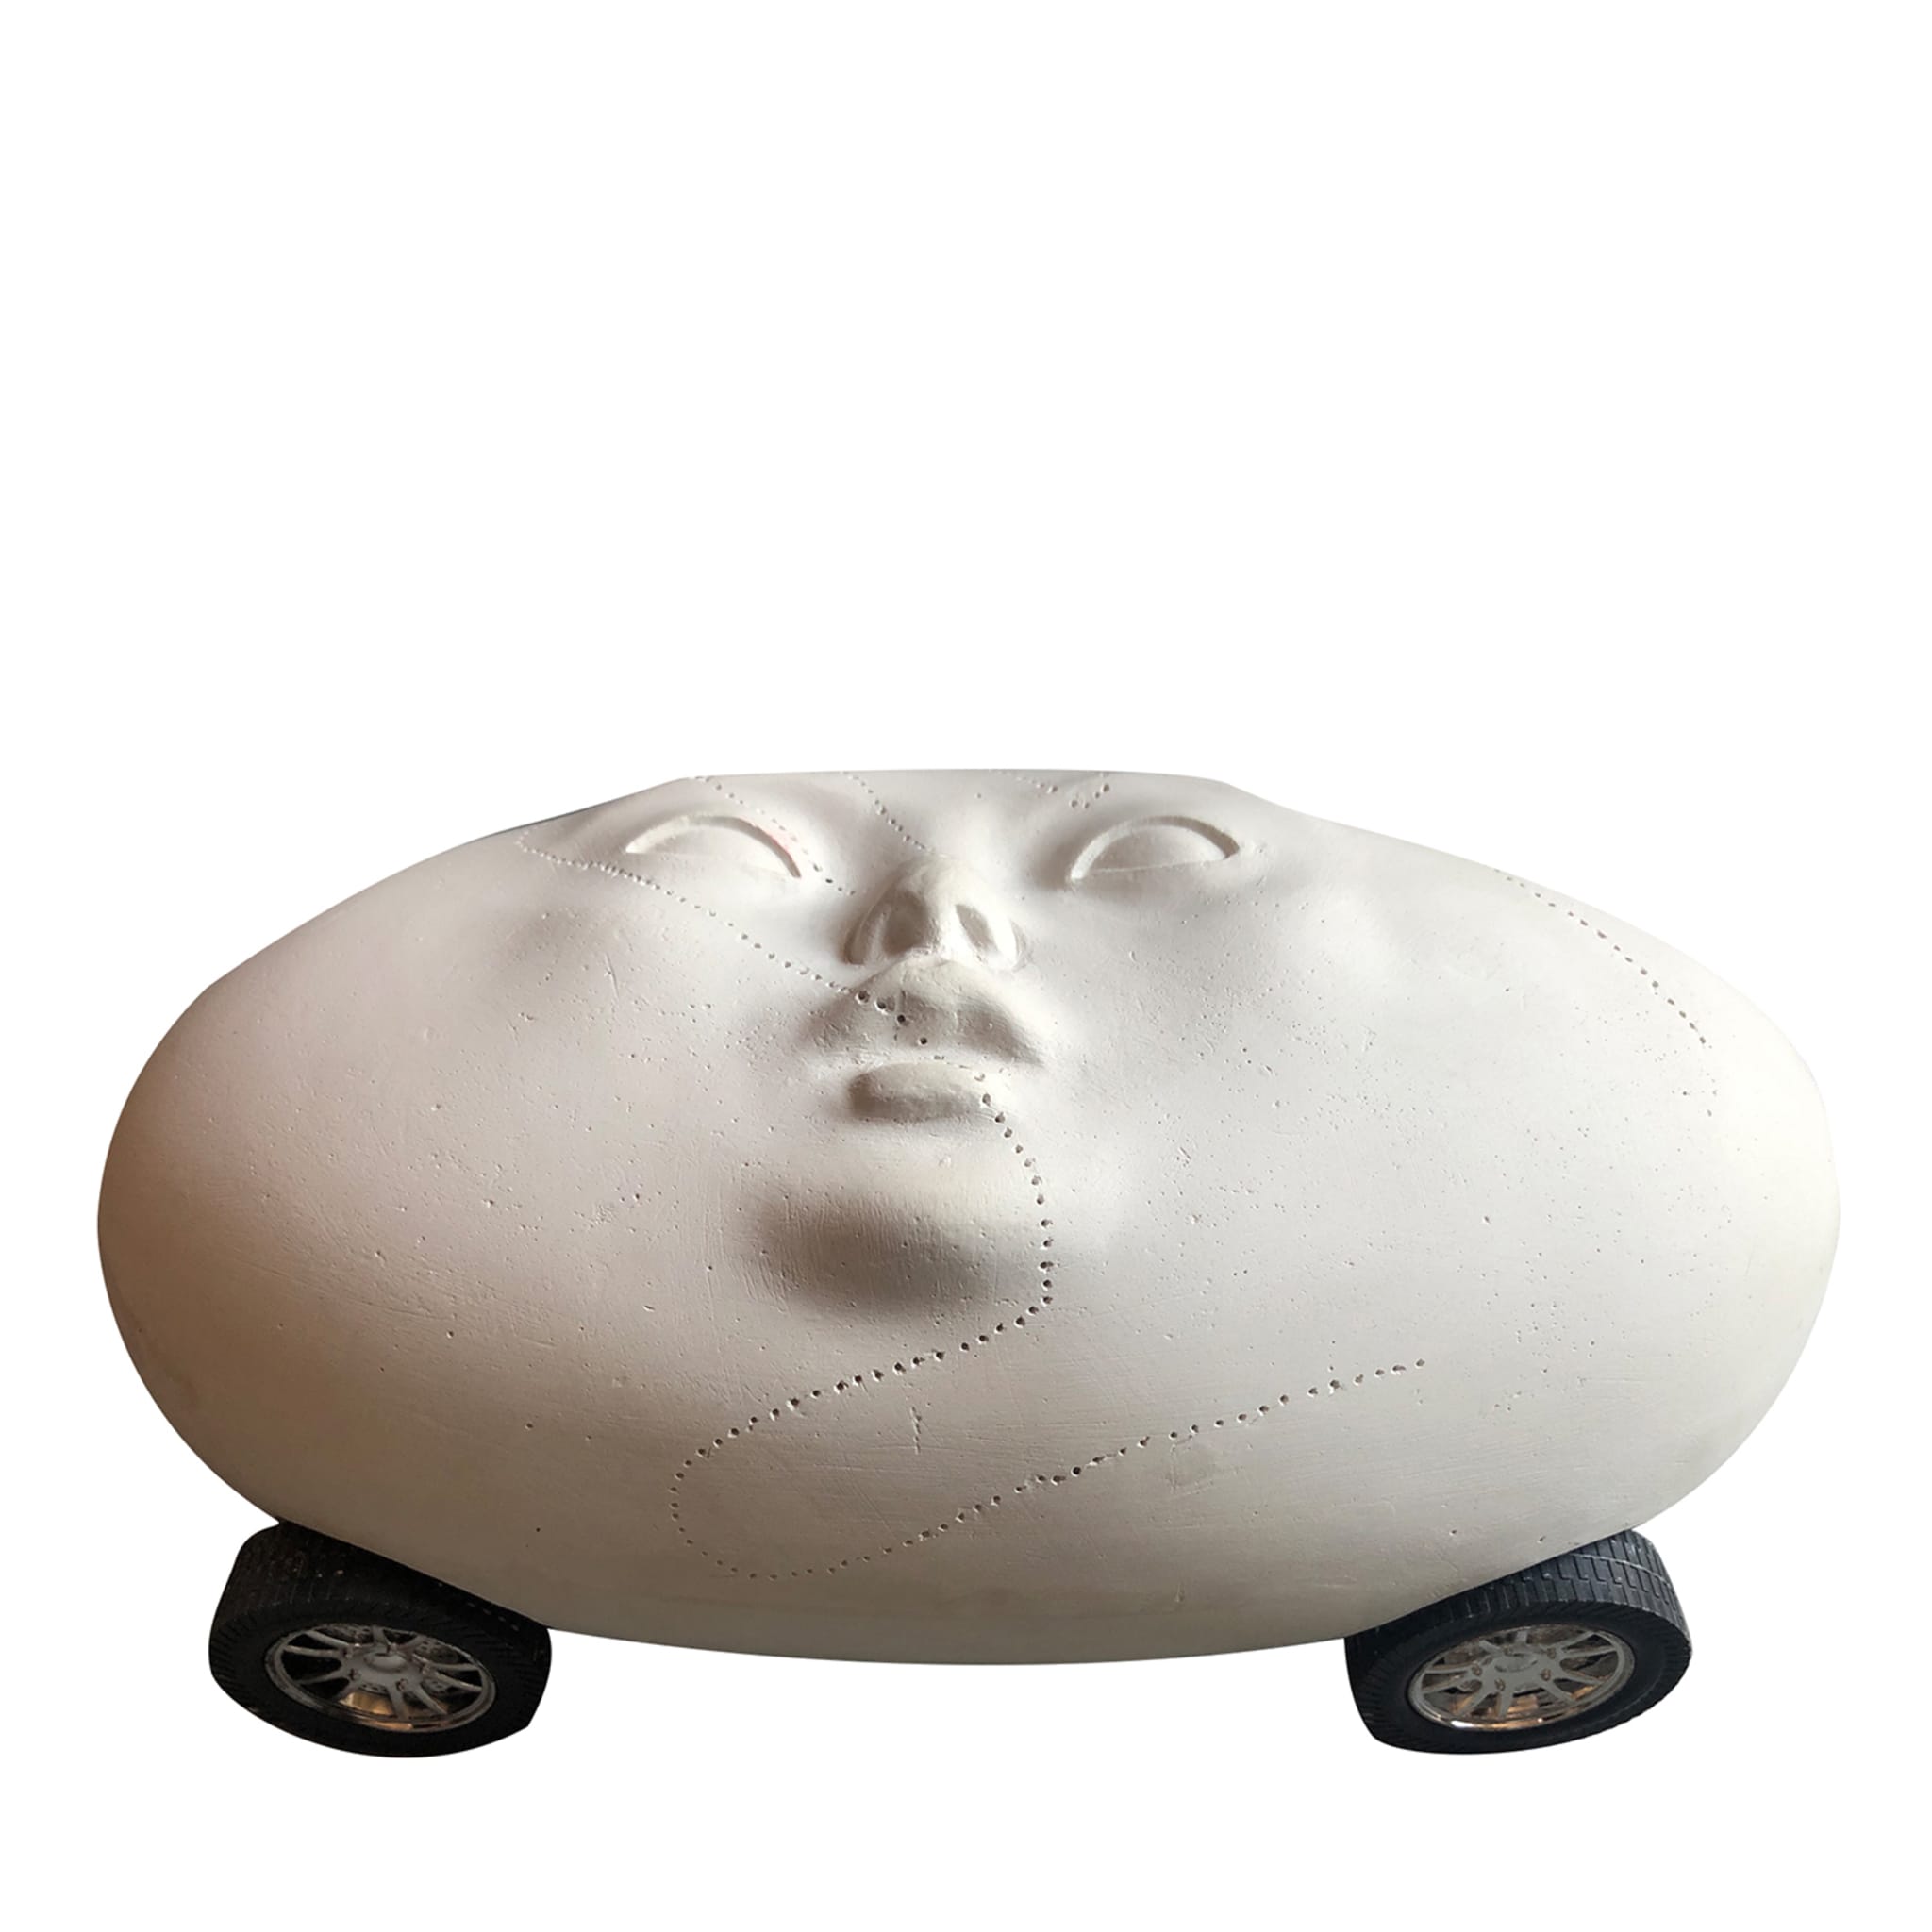 Sculpture de voiture de la pilule - Vue principale